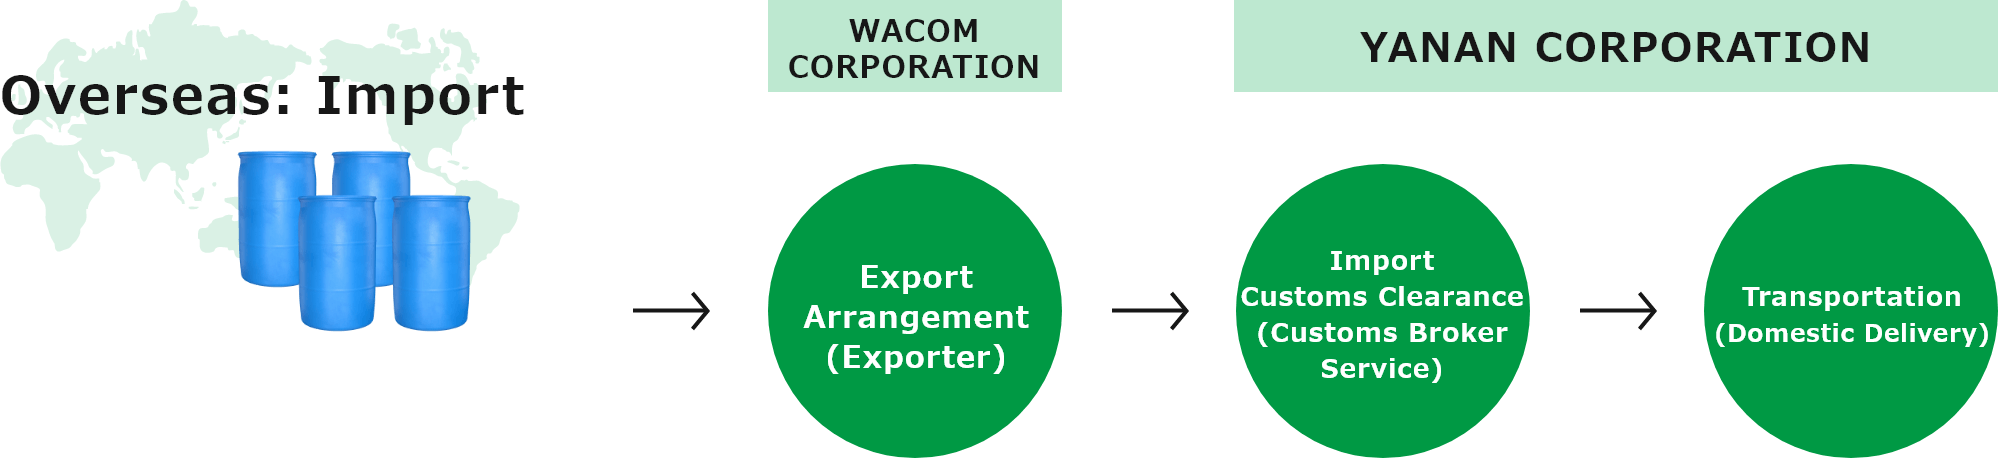 Overseas (Import): Export Arrangement (Exporter) → WACOM CORPORATION. Import Customs Clearance (Customs Broker Service), Transportation (Domestic Delivery) → YANAN CORPORATION.